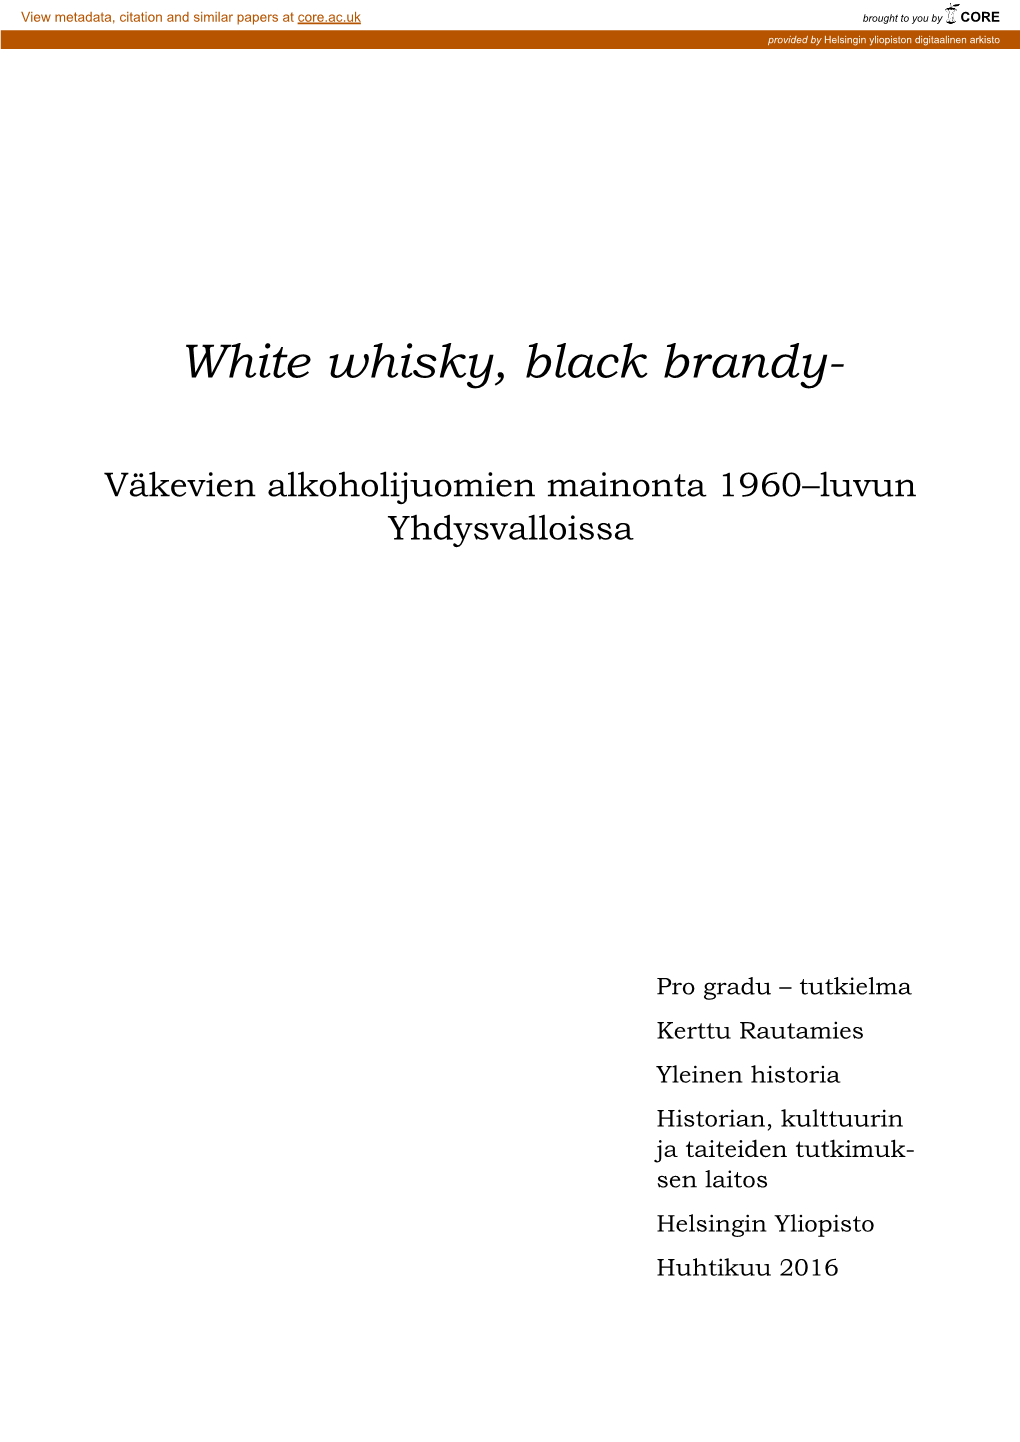 White Whisky, Black Brandy